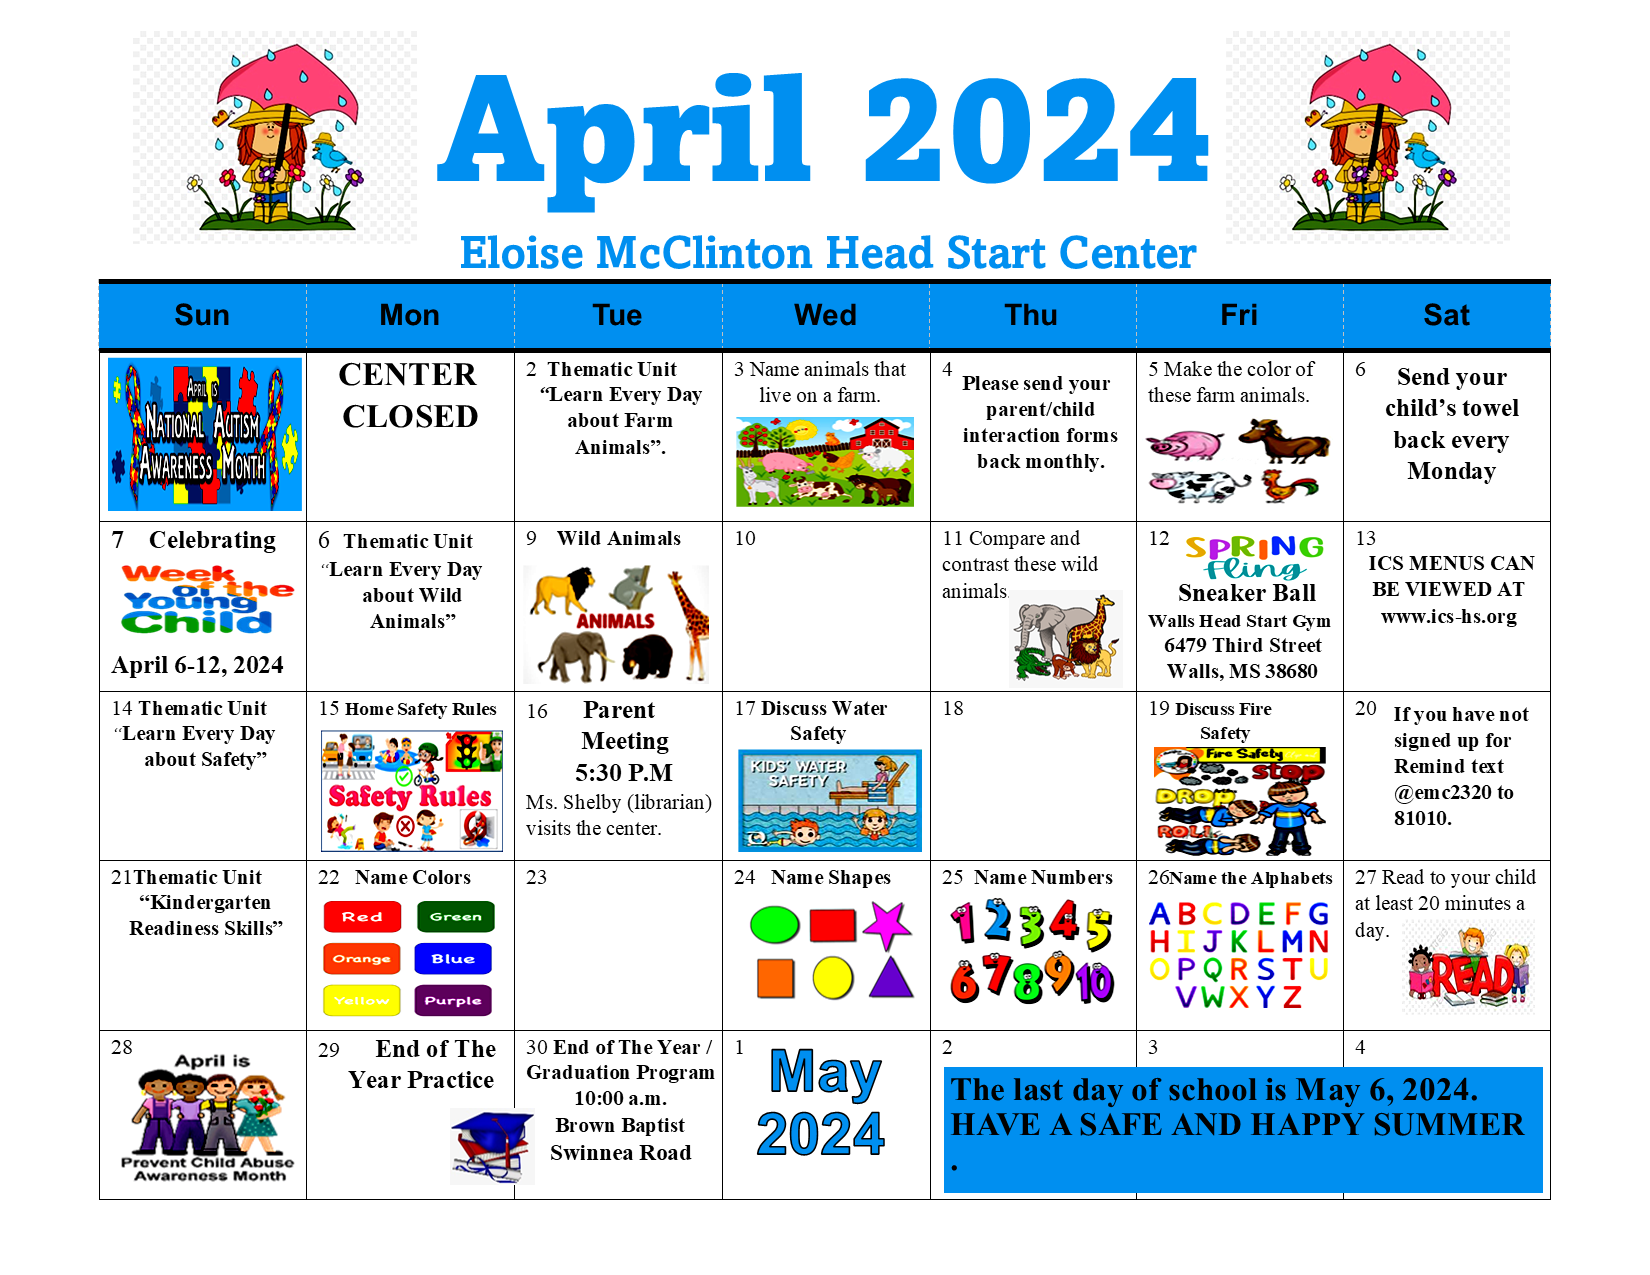 E-McClinton-April 2024 calendar